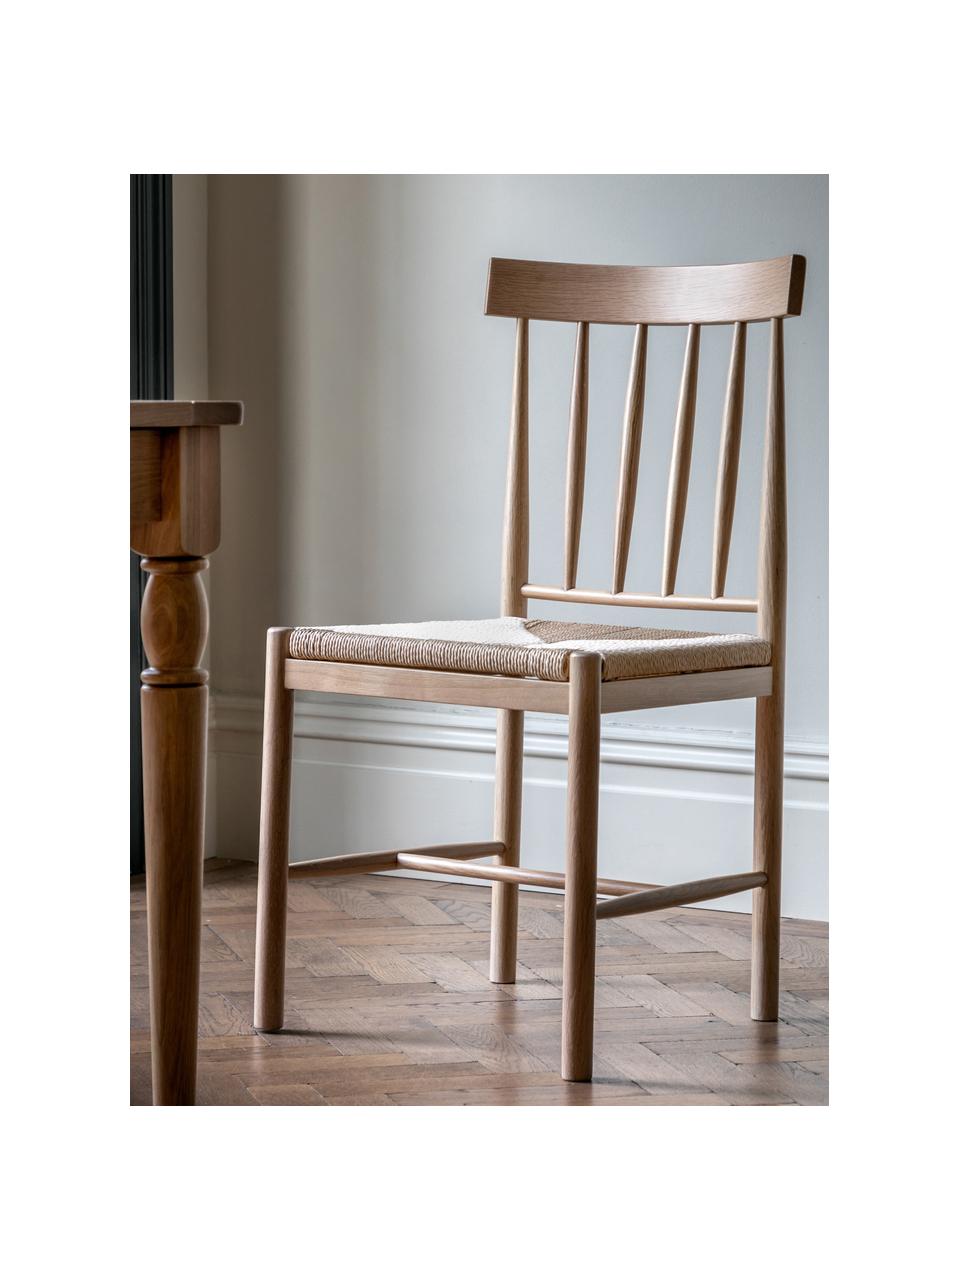 Handgefertigte Eichenholz-Stühle Eton, 2 Stück, Sitzfläche: Seil, Gestell: Eichenholz, Eichenholz, Hellbeige, B 46 x T 45 cm